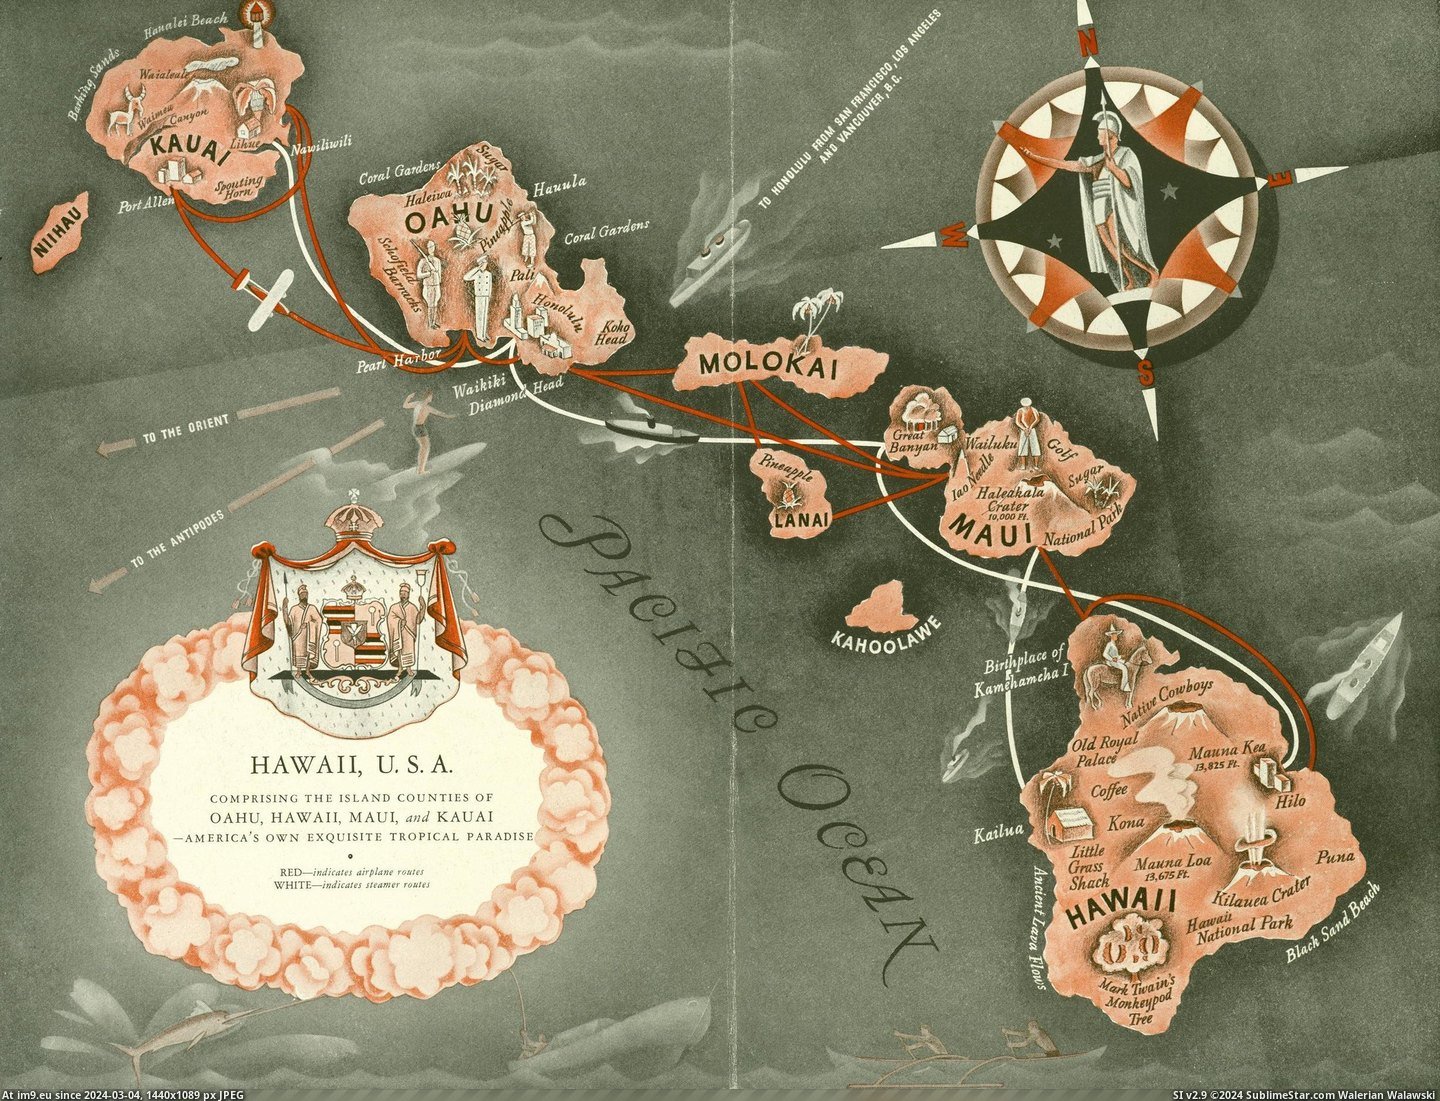 #Islands #Stewart #Hawaiian #Hawaii [Mapporn] The Hawaiian Islands from Norma Stewart's 1935 Aloha Hawaii scrapbook. [2,450 x 1,865] Pic. (Изображение из альбом My r/MAPS favs))